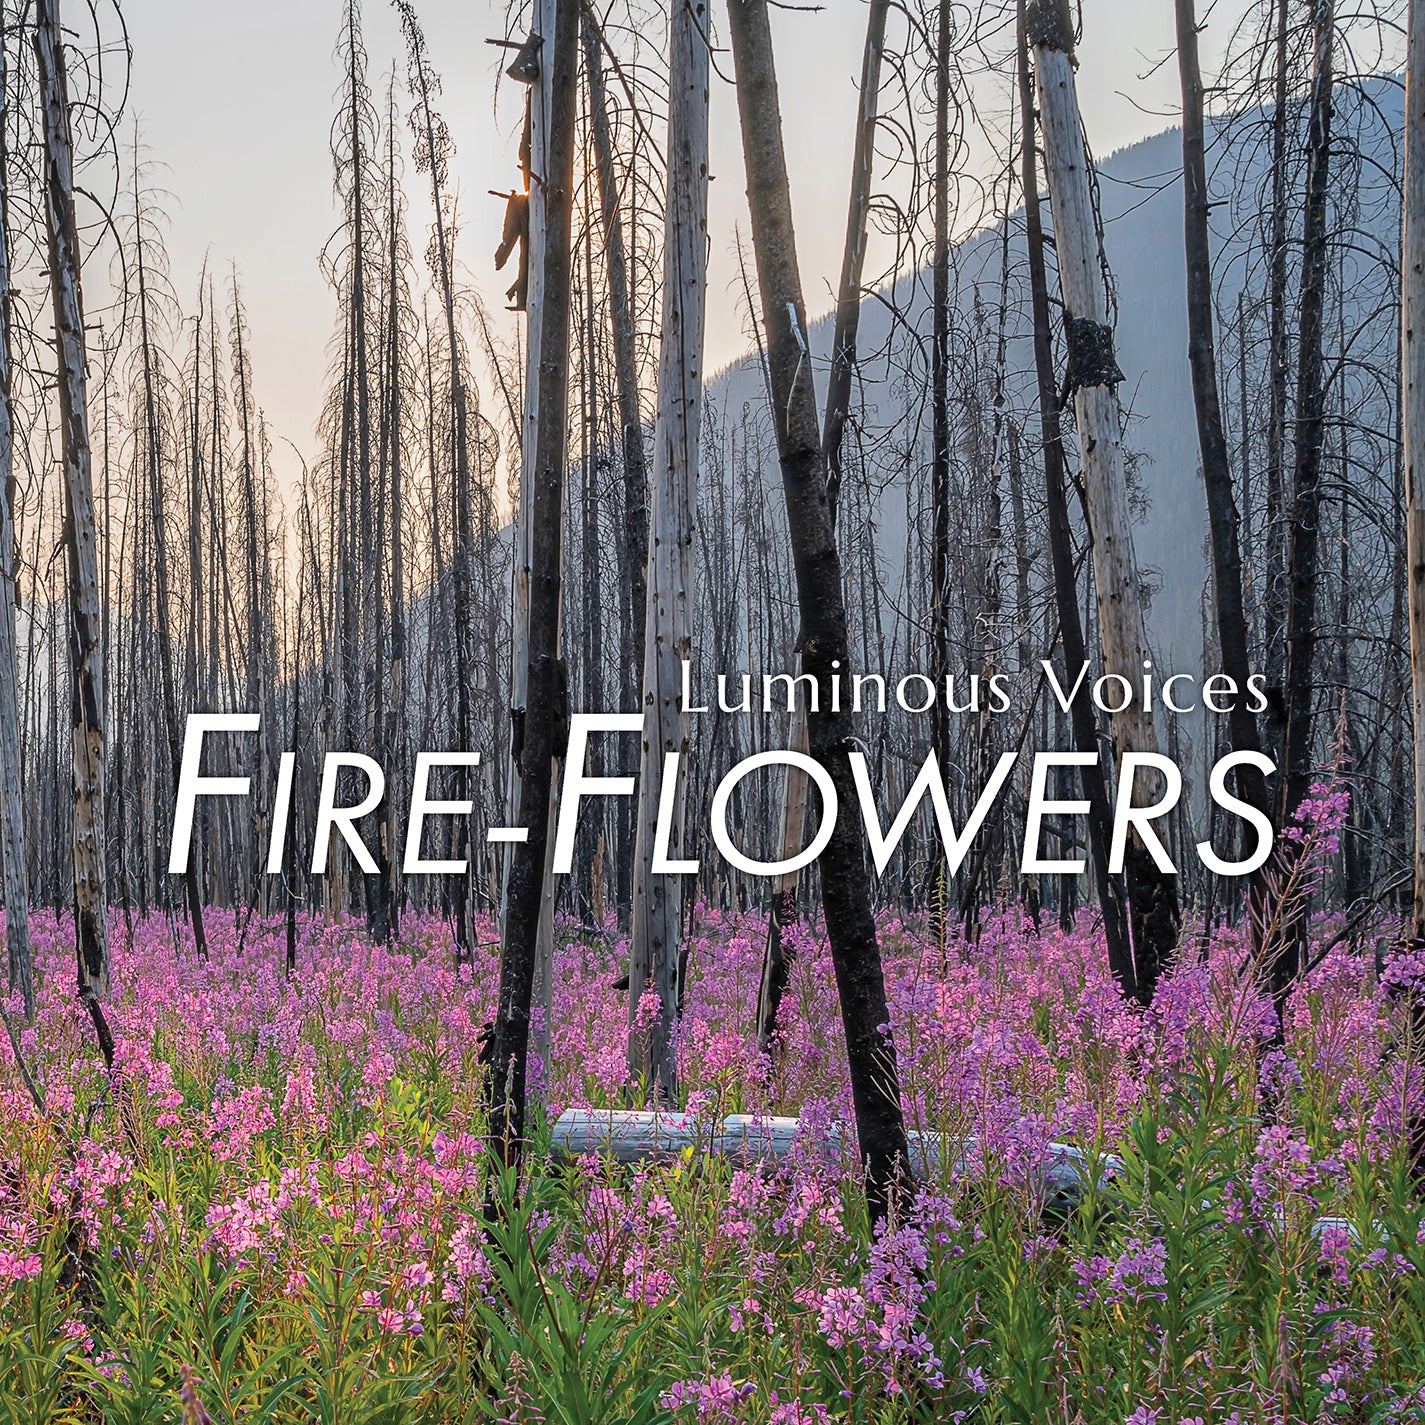 Brahms & Wadsworth: Fire-Flowers